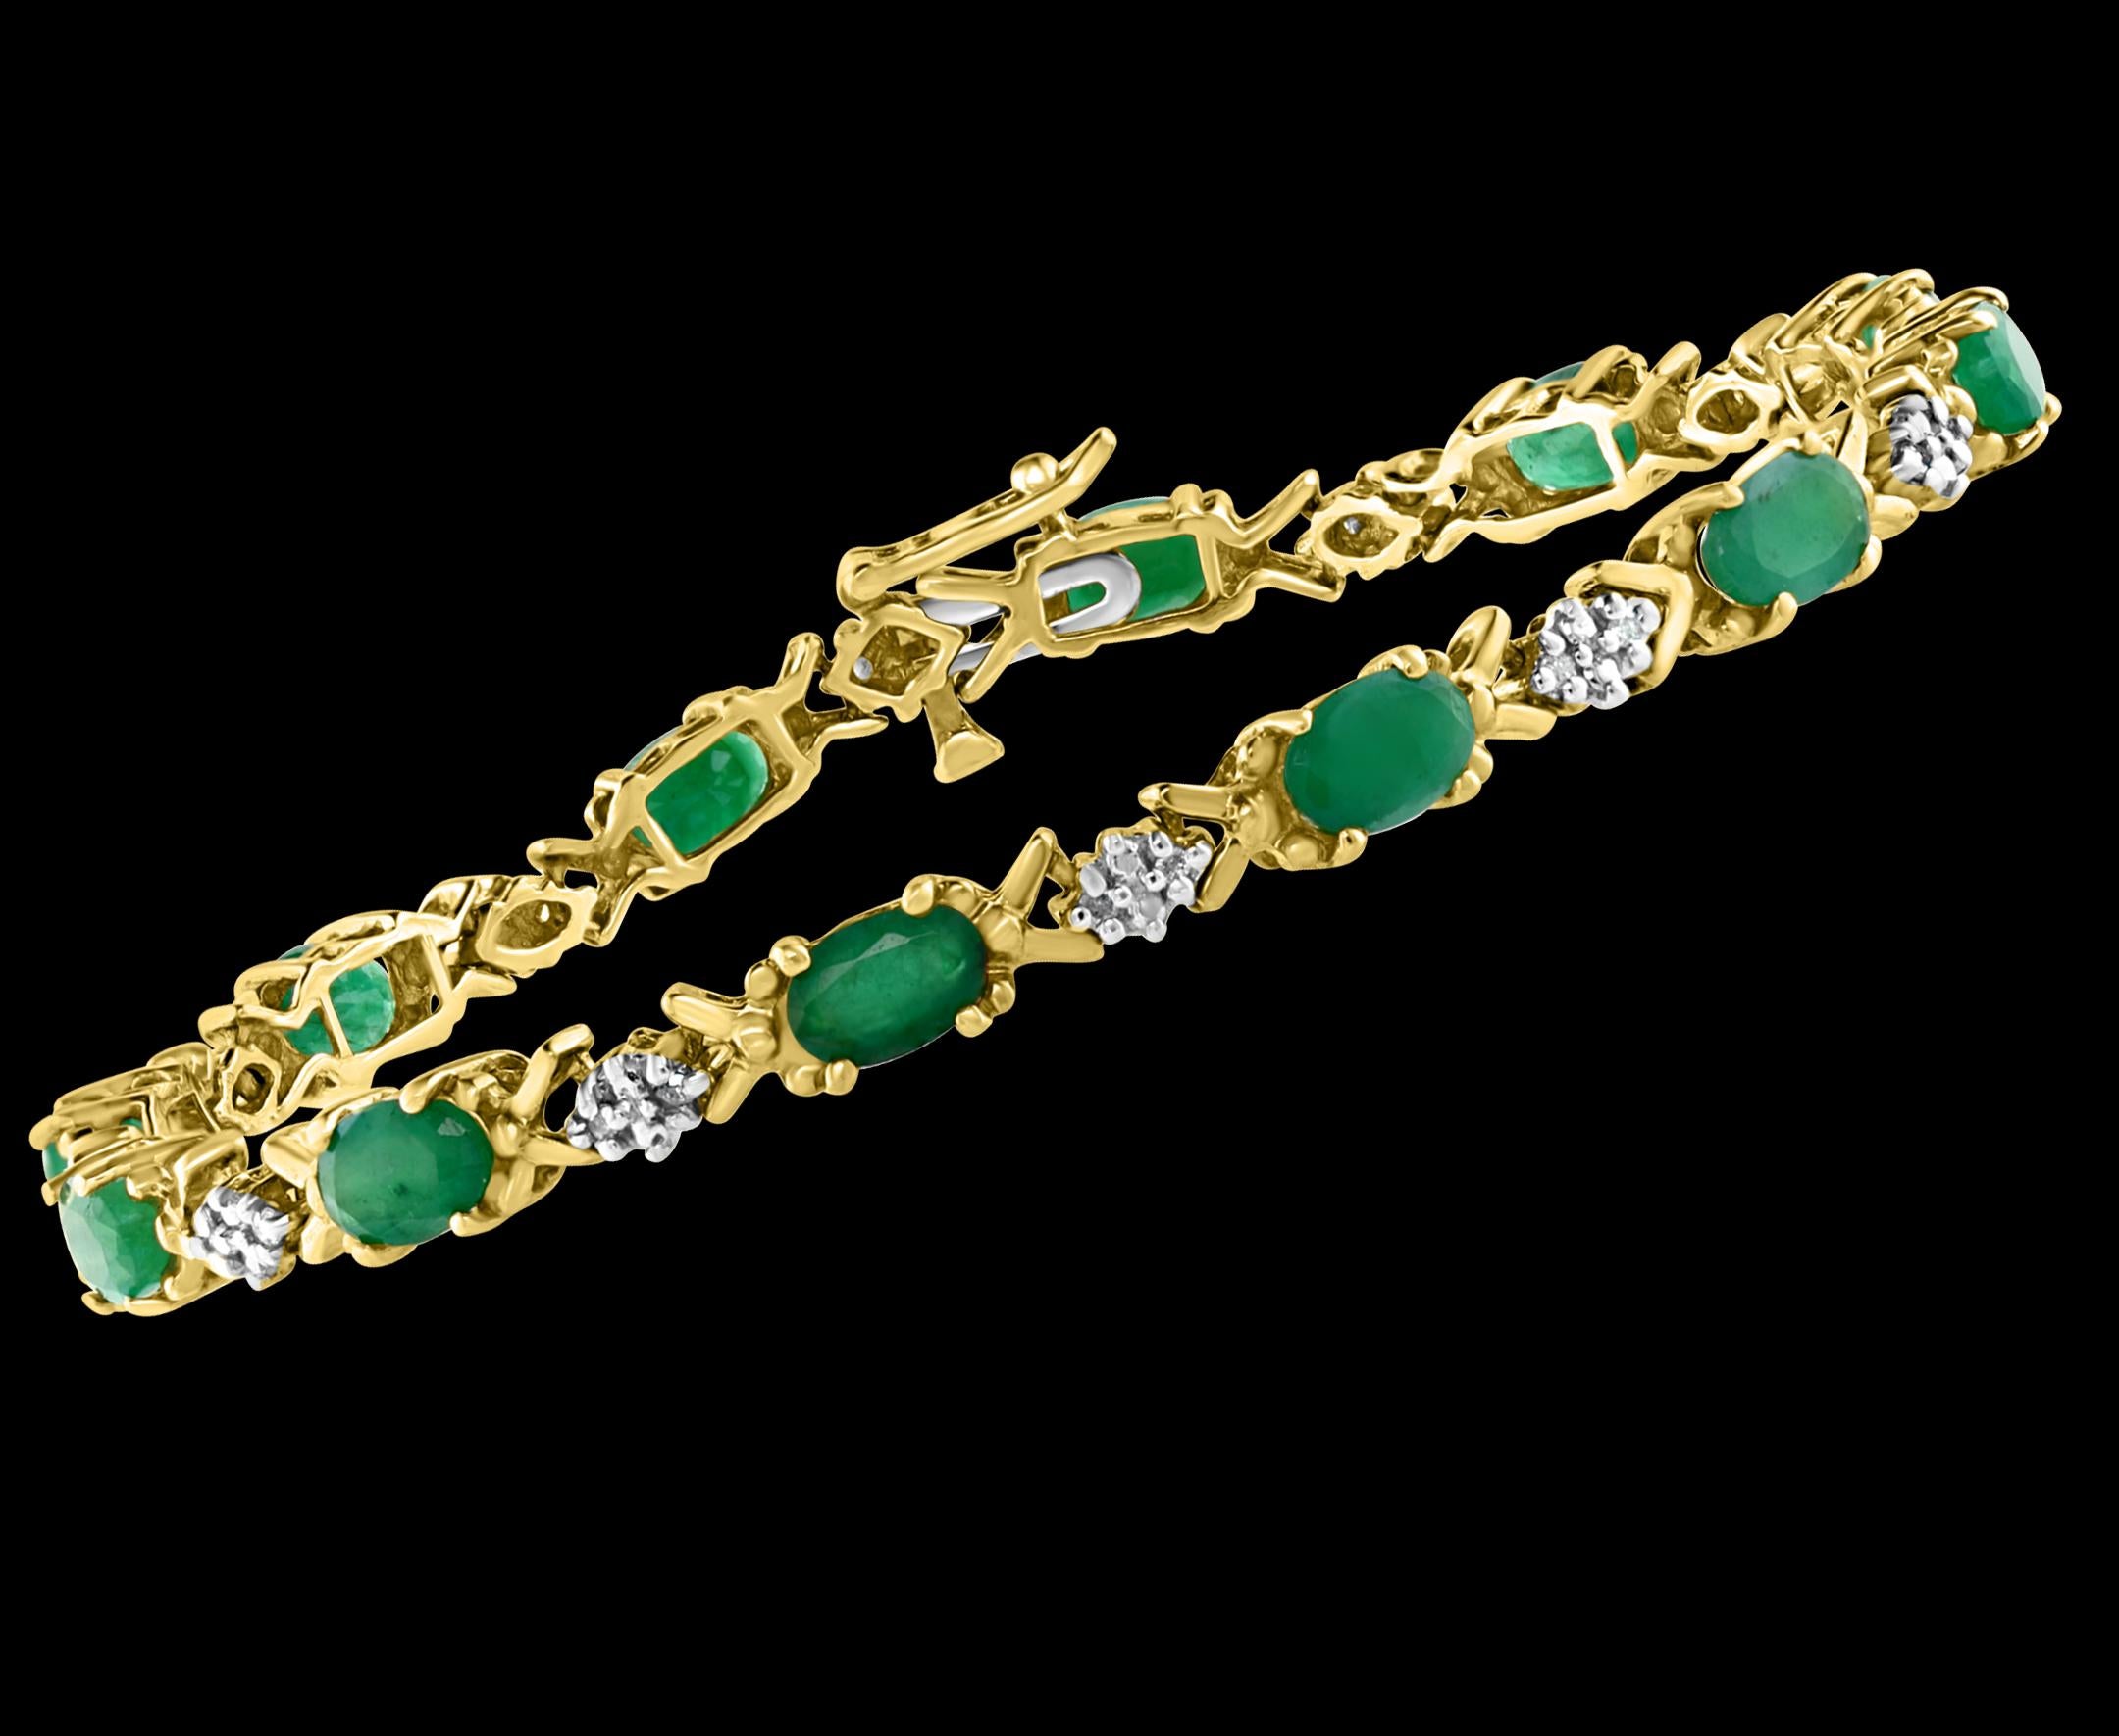 Oval Cut 5 Carat Emerald Tennis Bracelet 10 Karat Yellow Gold with Diamond Accent